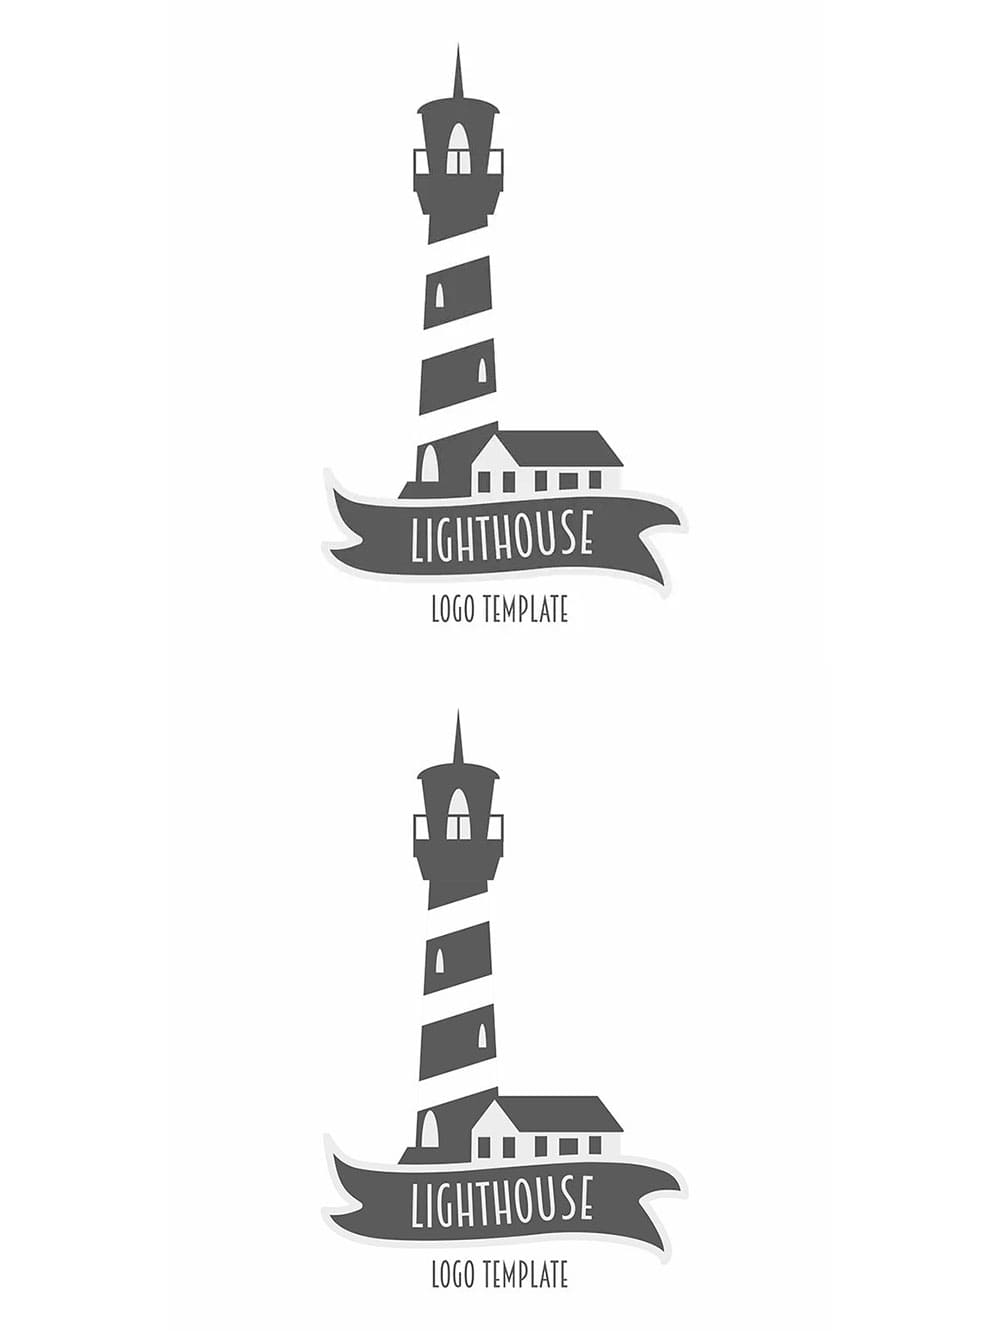 Lighthouse logo or label design, picture for pinterest.